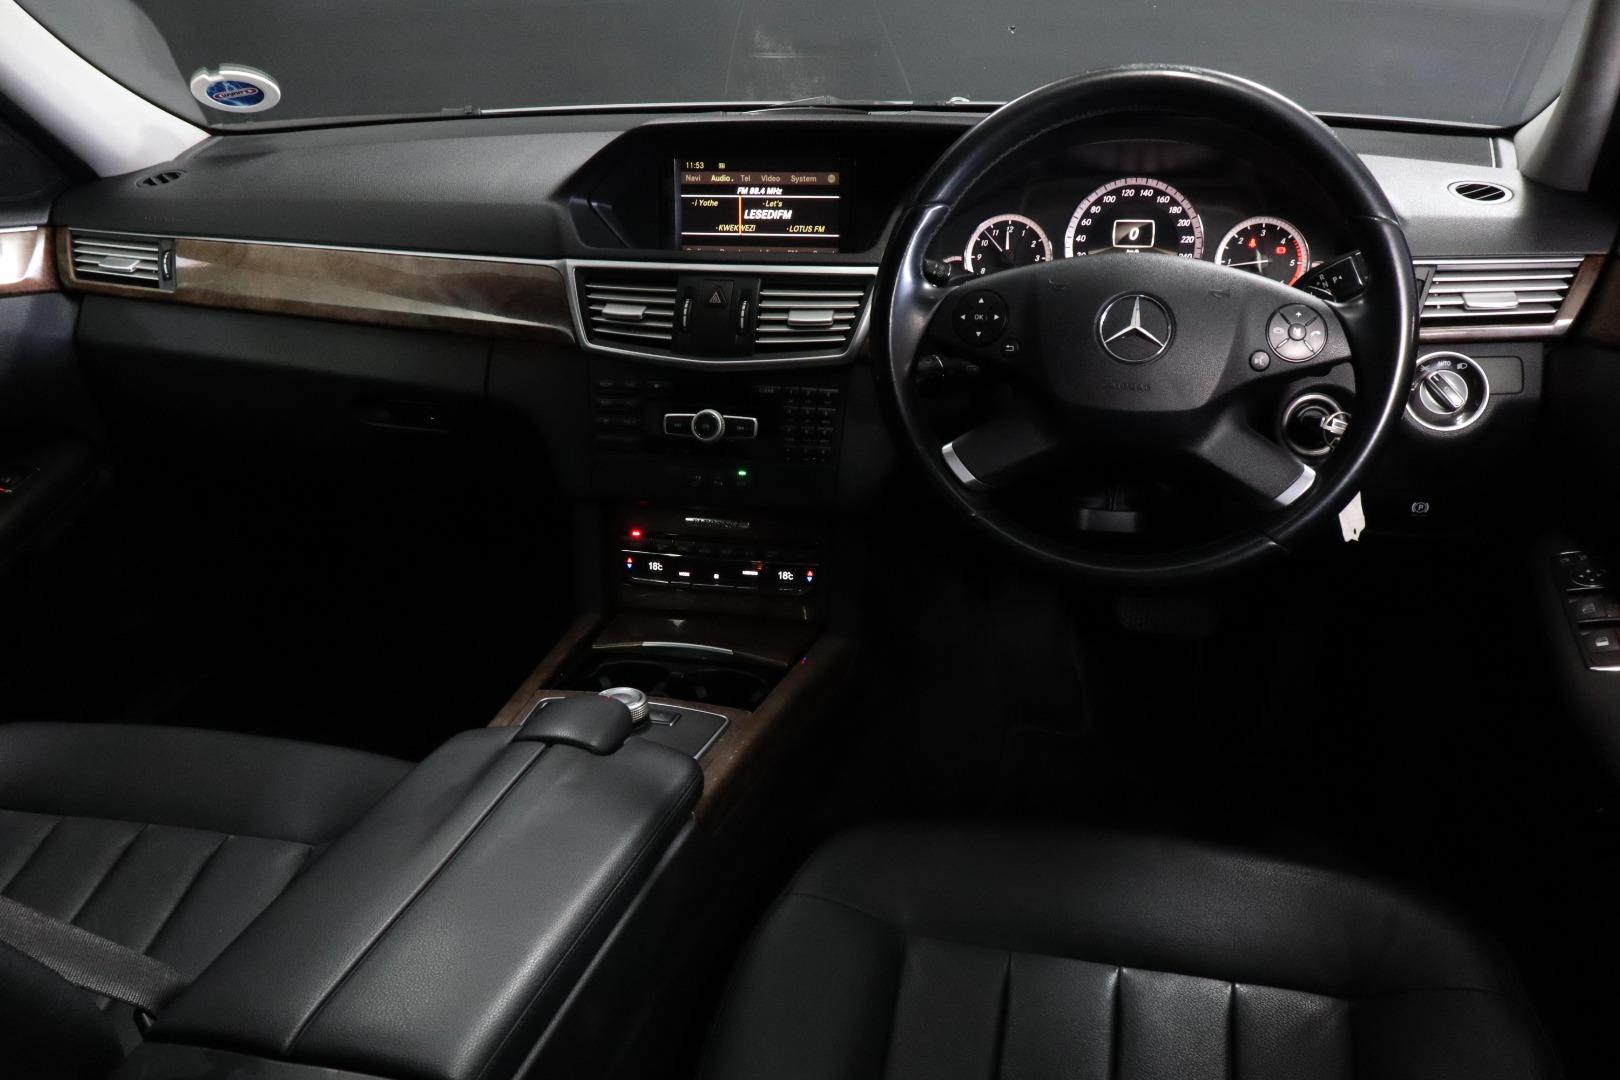 Mercedes-Benz E-Class Sedan 2013 E 250 Cdi Elegance 7G-Tronic for sale